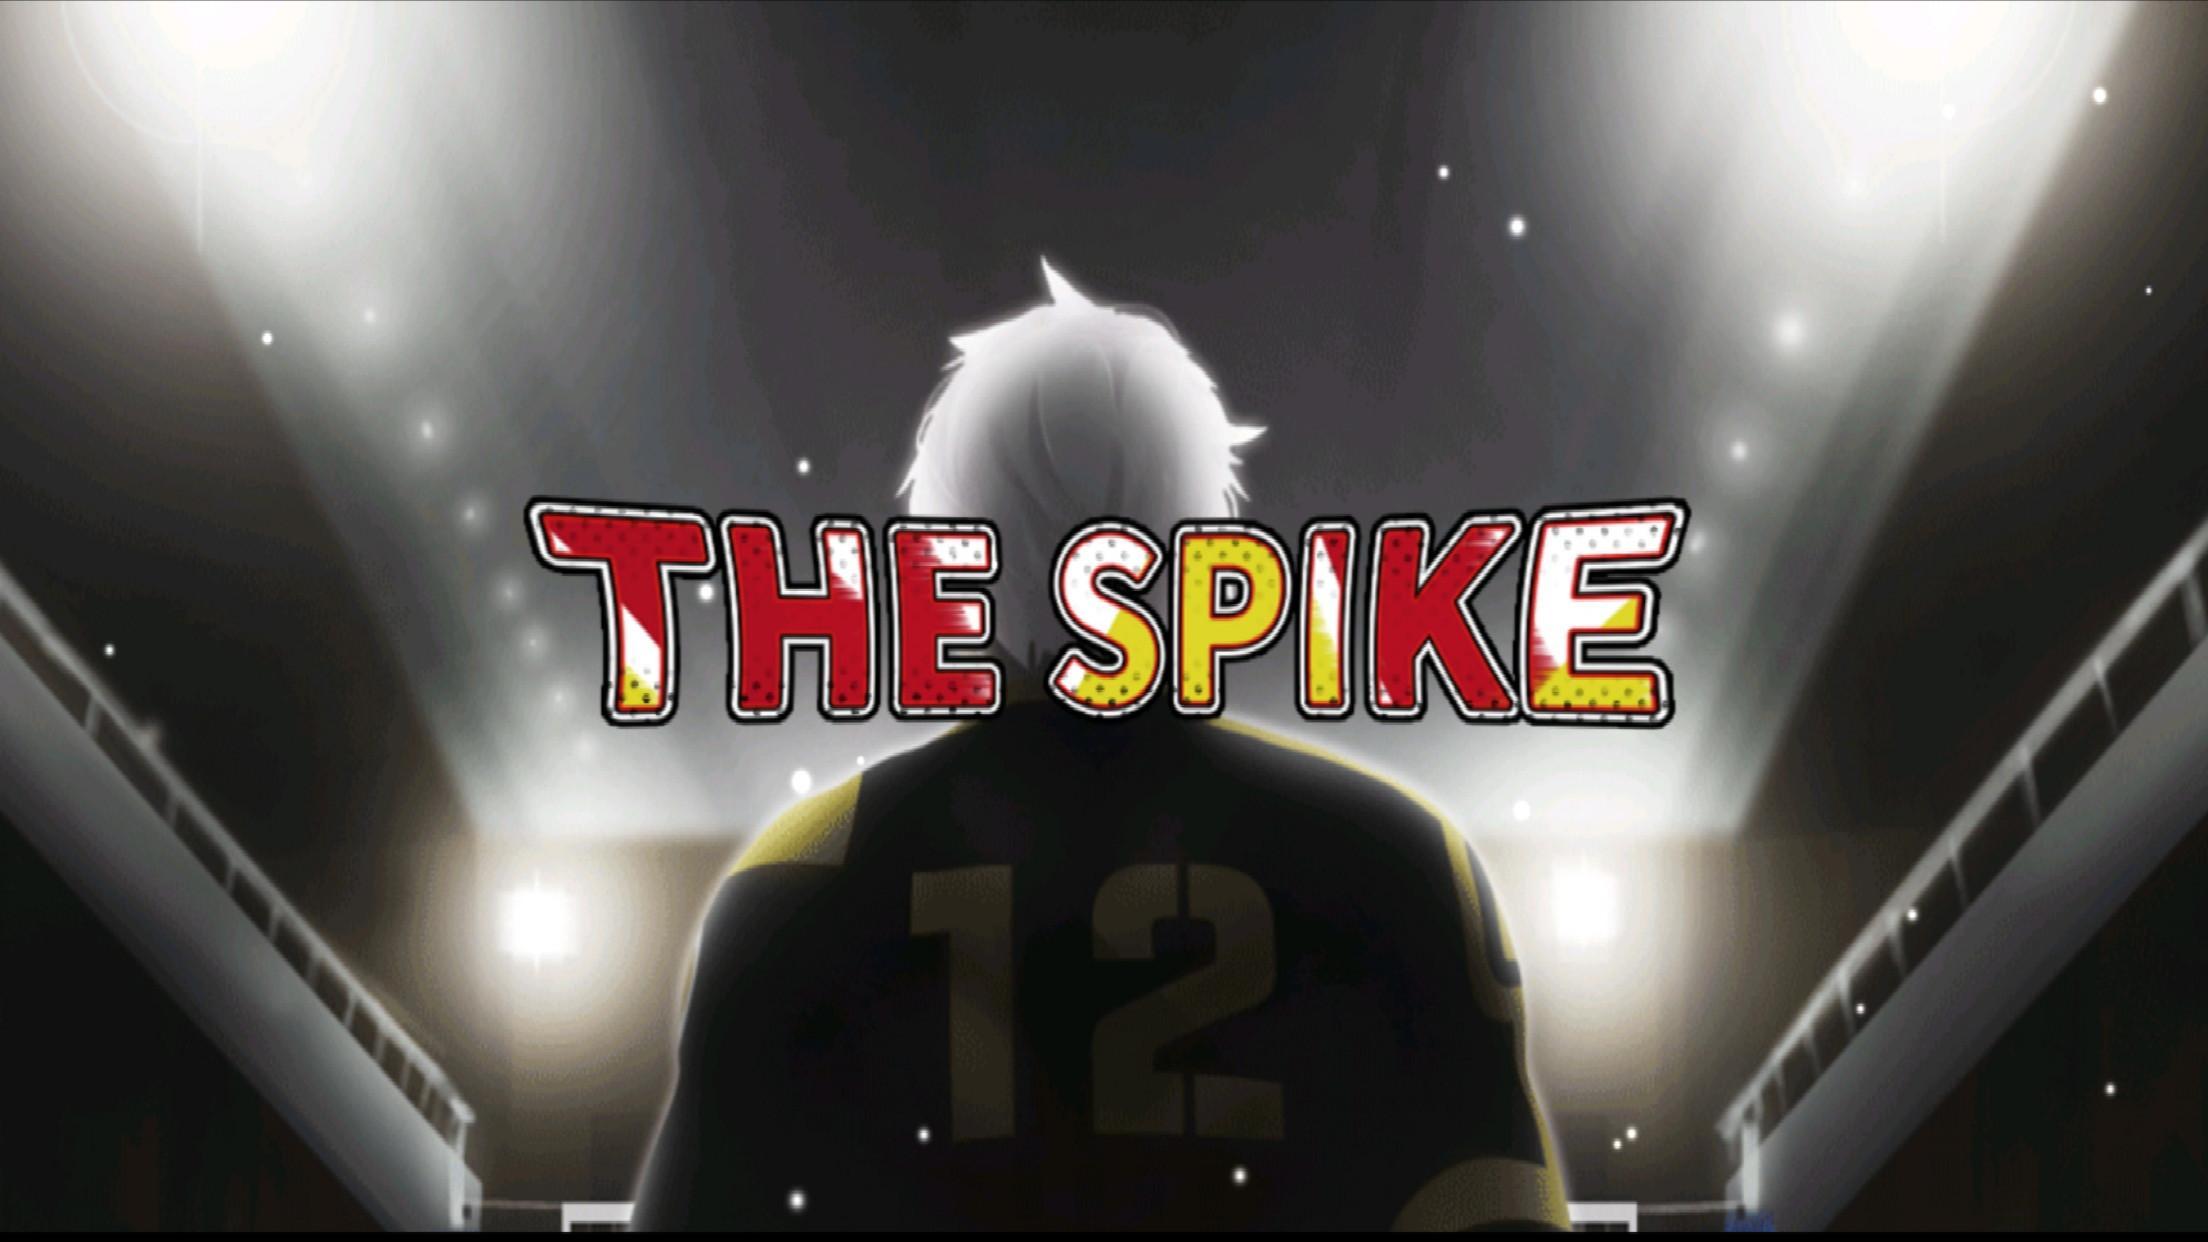 Зе спайк последняя версия. The Spike Volleyball игра. The Spike Volleyball story. Spike в волейболе. Спайк игра волейбол.